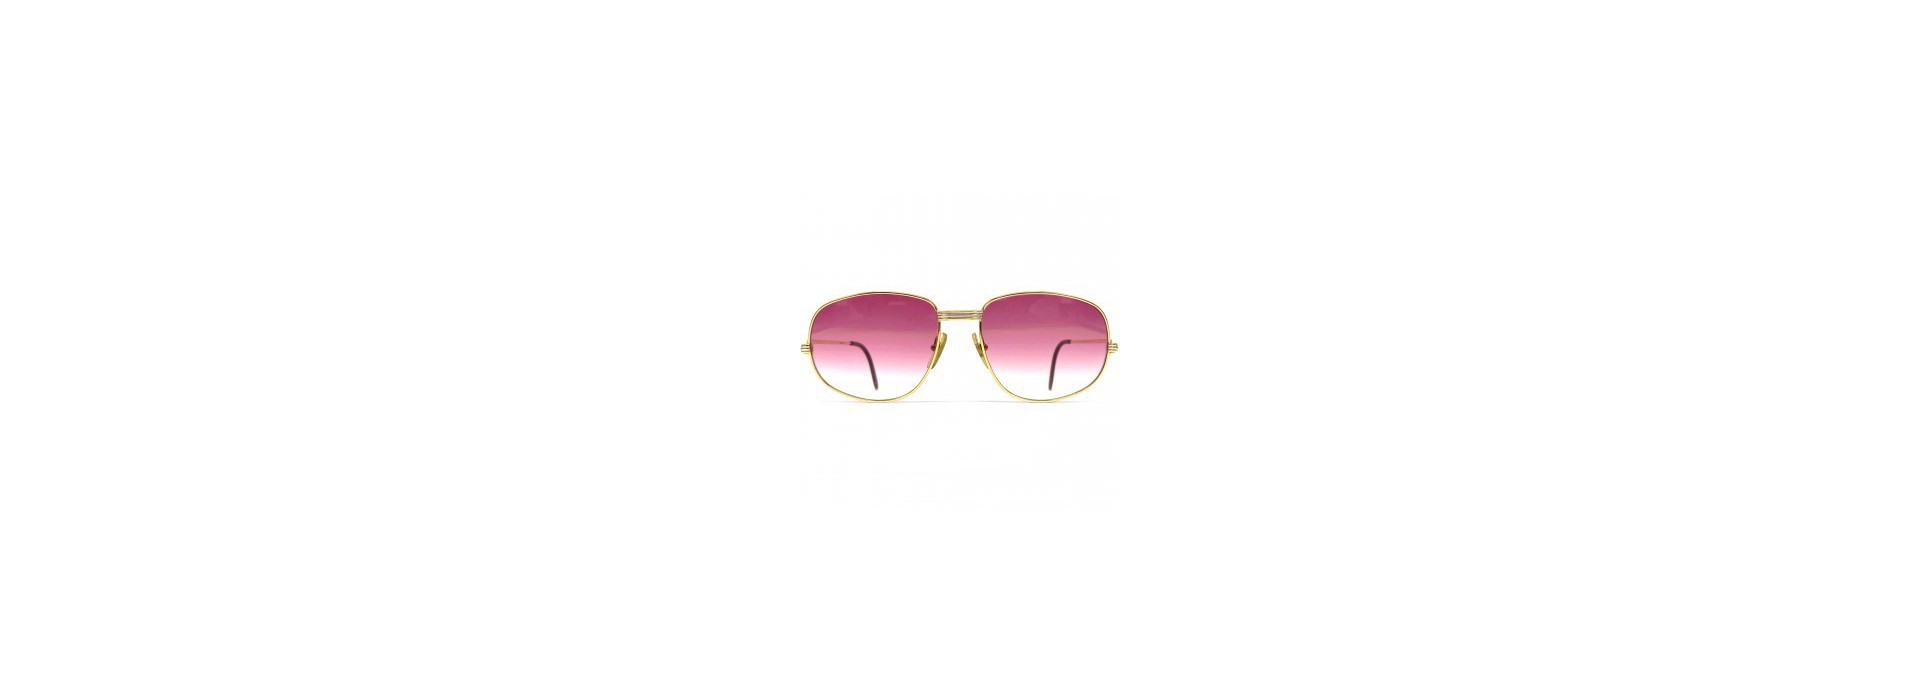 ▷ Oval Retro Sunglasses ® | Genuine Vintage Sunglasses ✔️